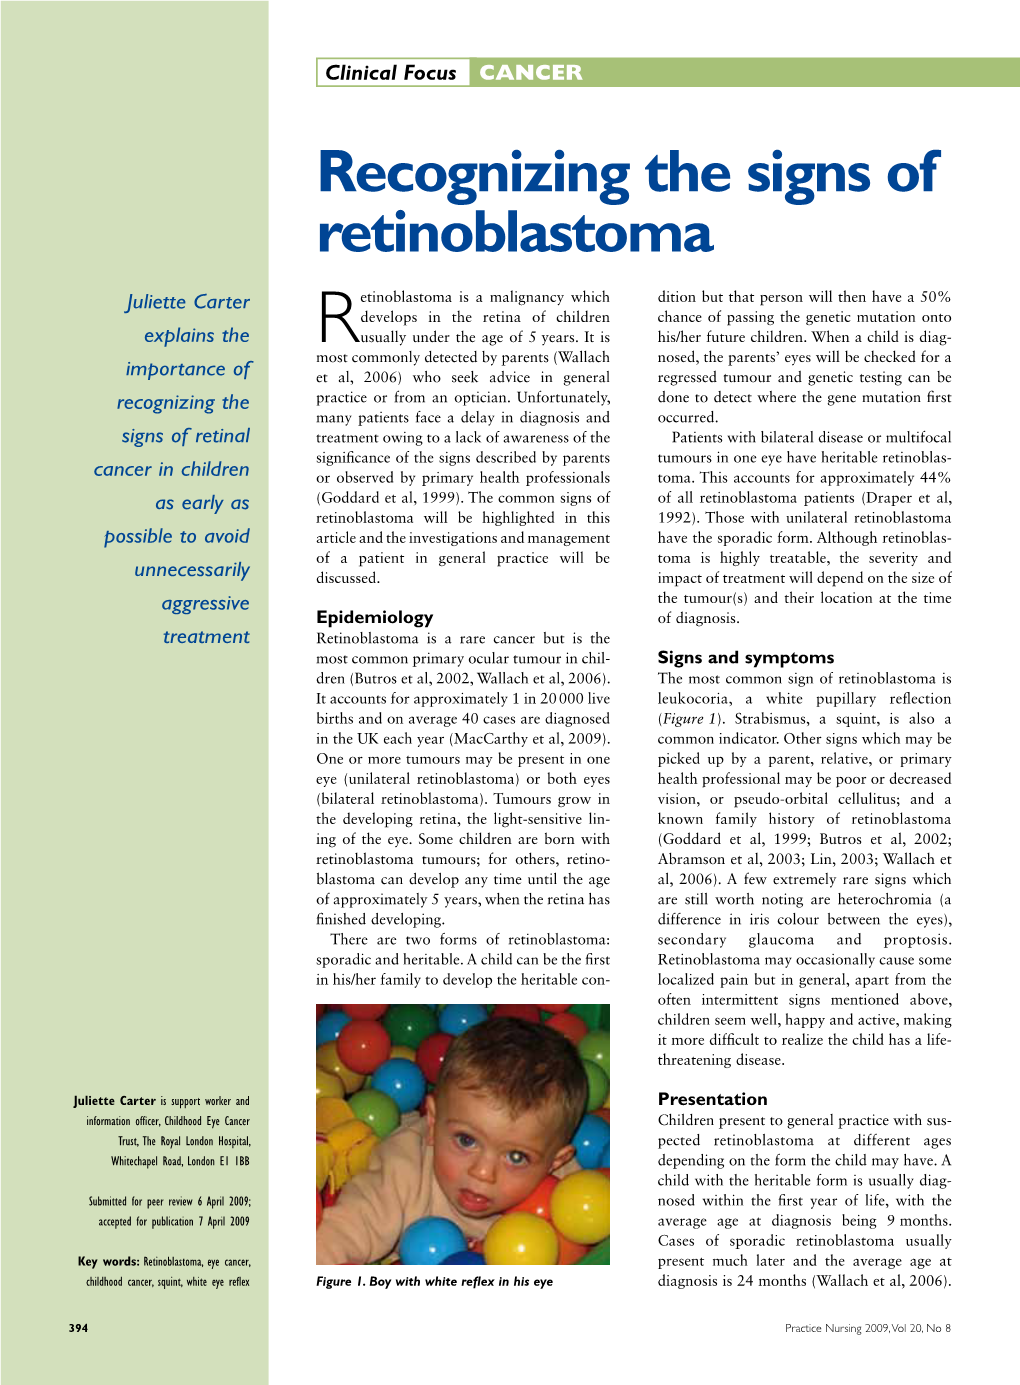 Recognizing the Signs of Retinoblastoma